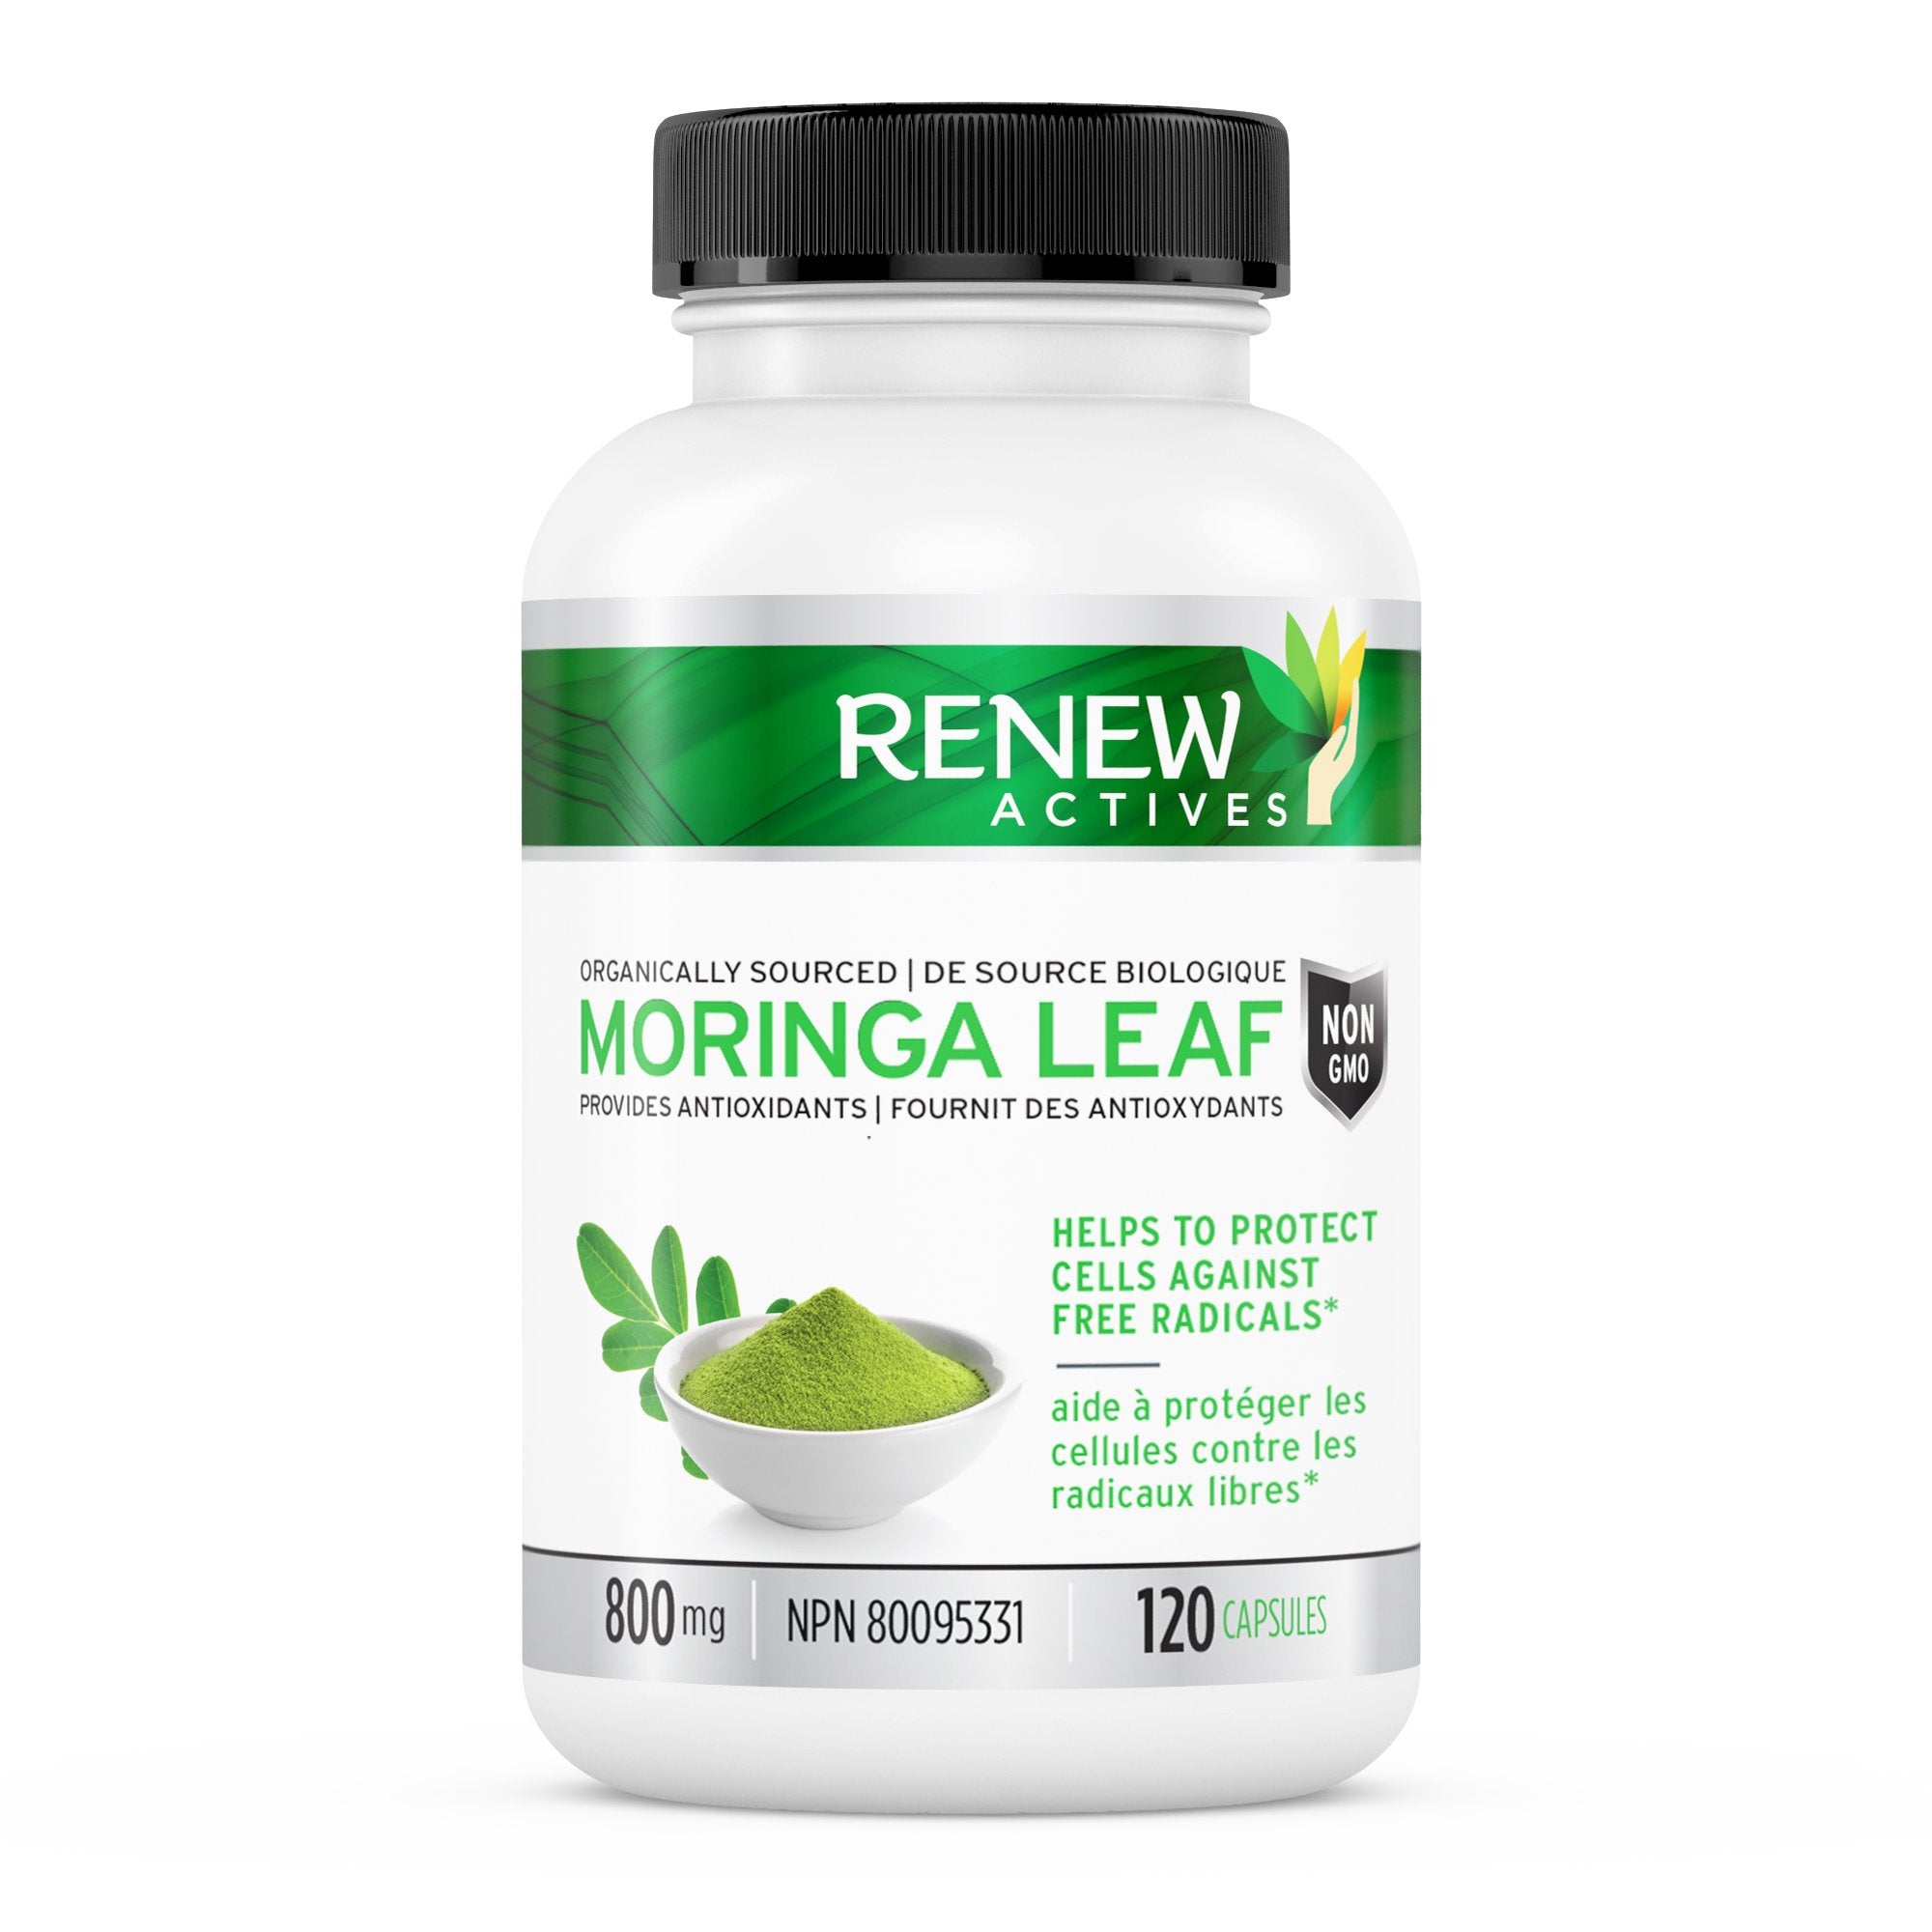 Renew Actives Organic Moringa Leaf Supplement: 120 High Potency Moringa Oleifera Capsules